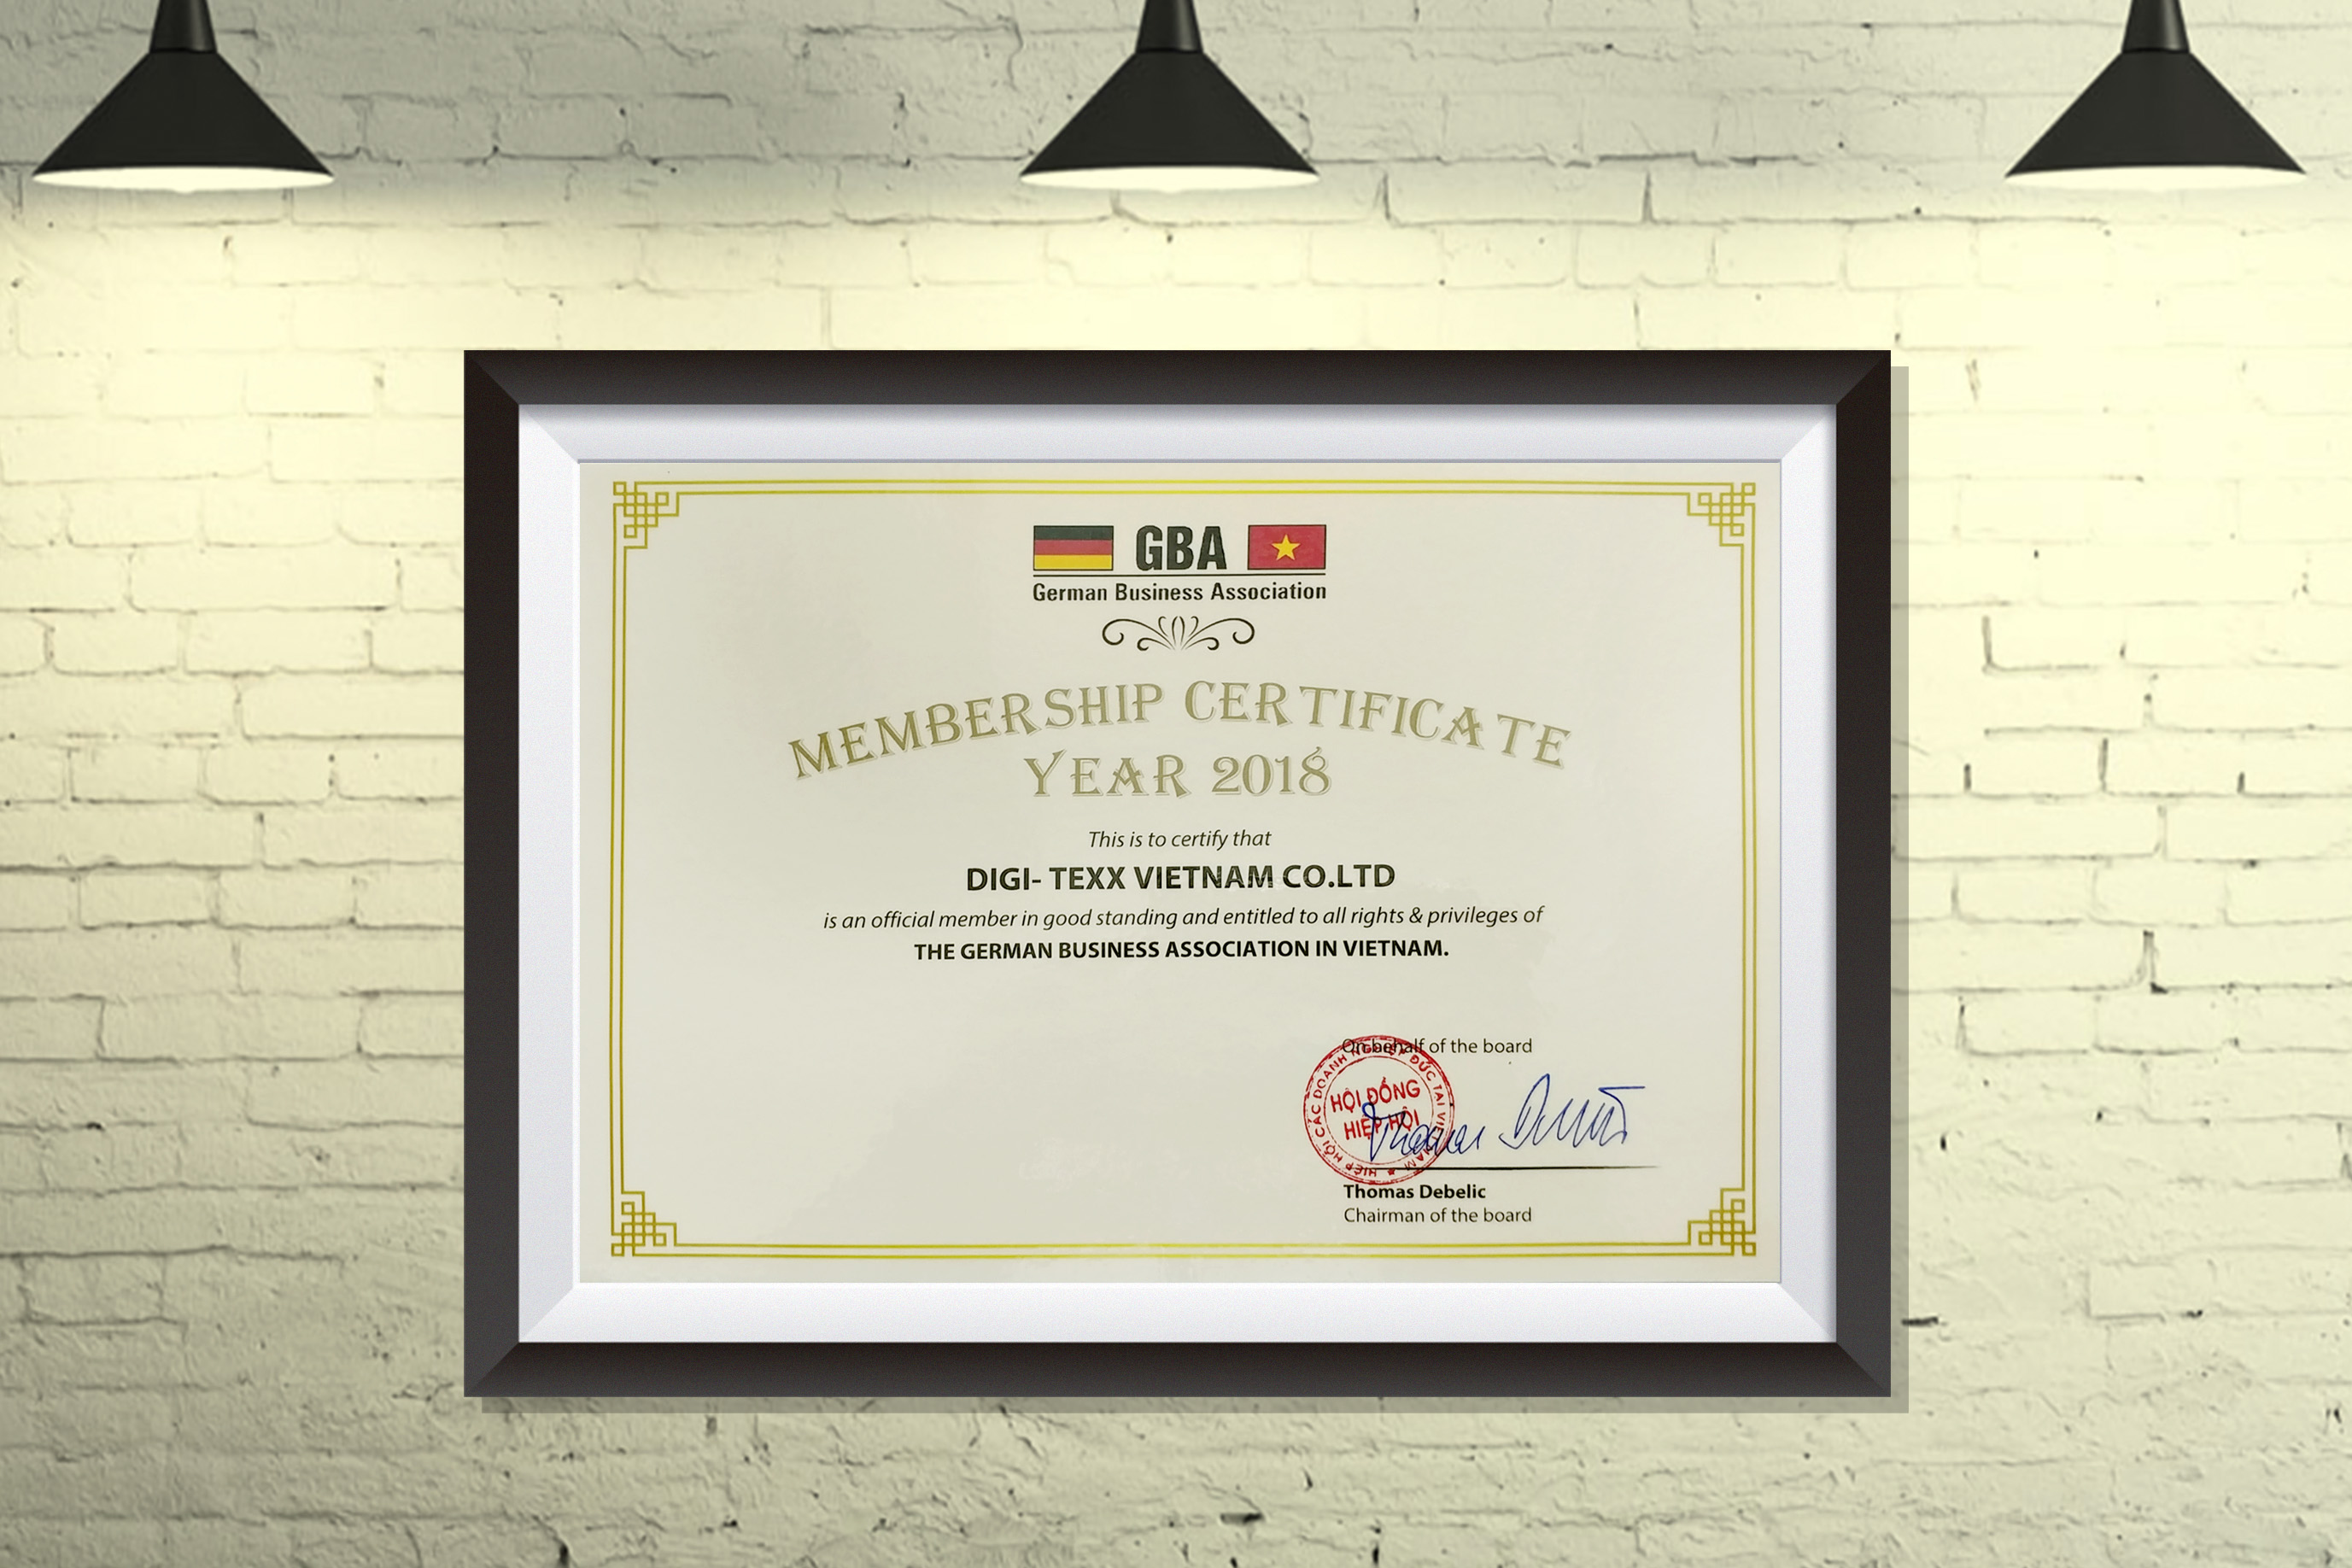 DIGI-TEXX: Our GBA membership certificate year 2018